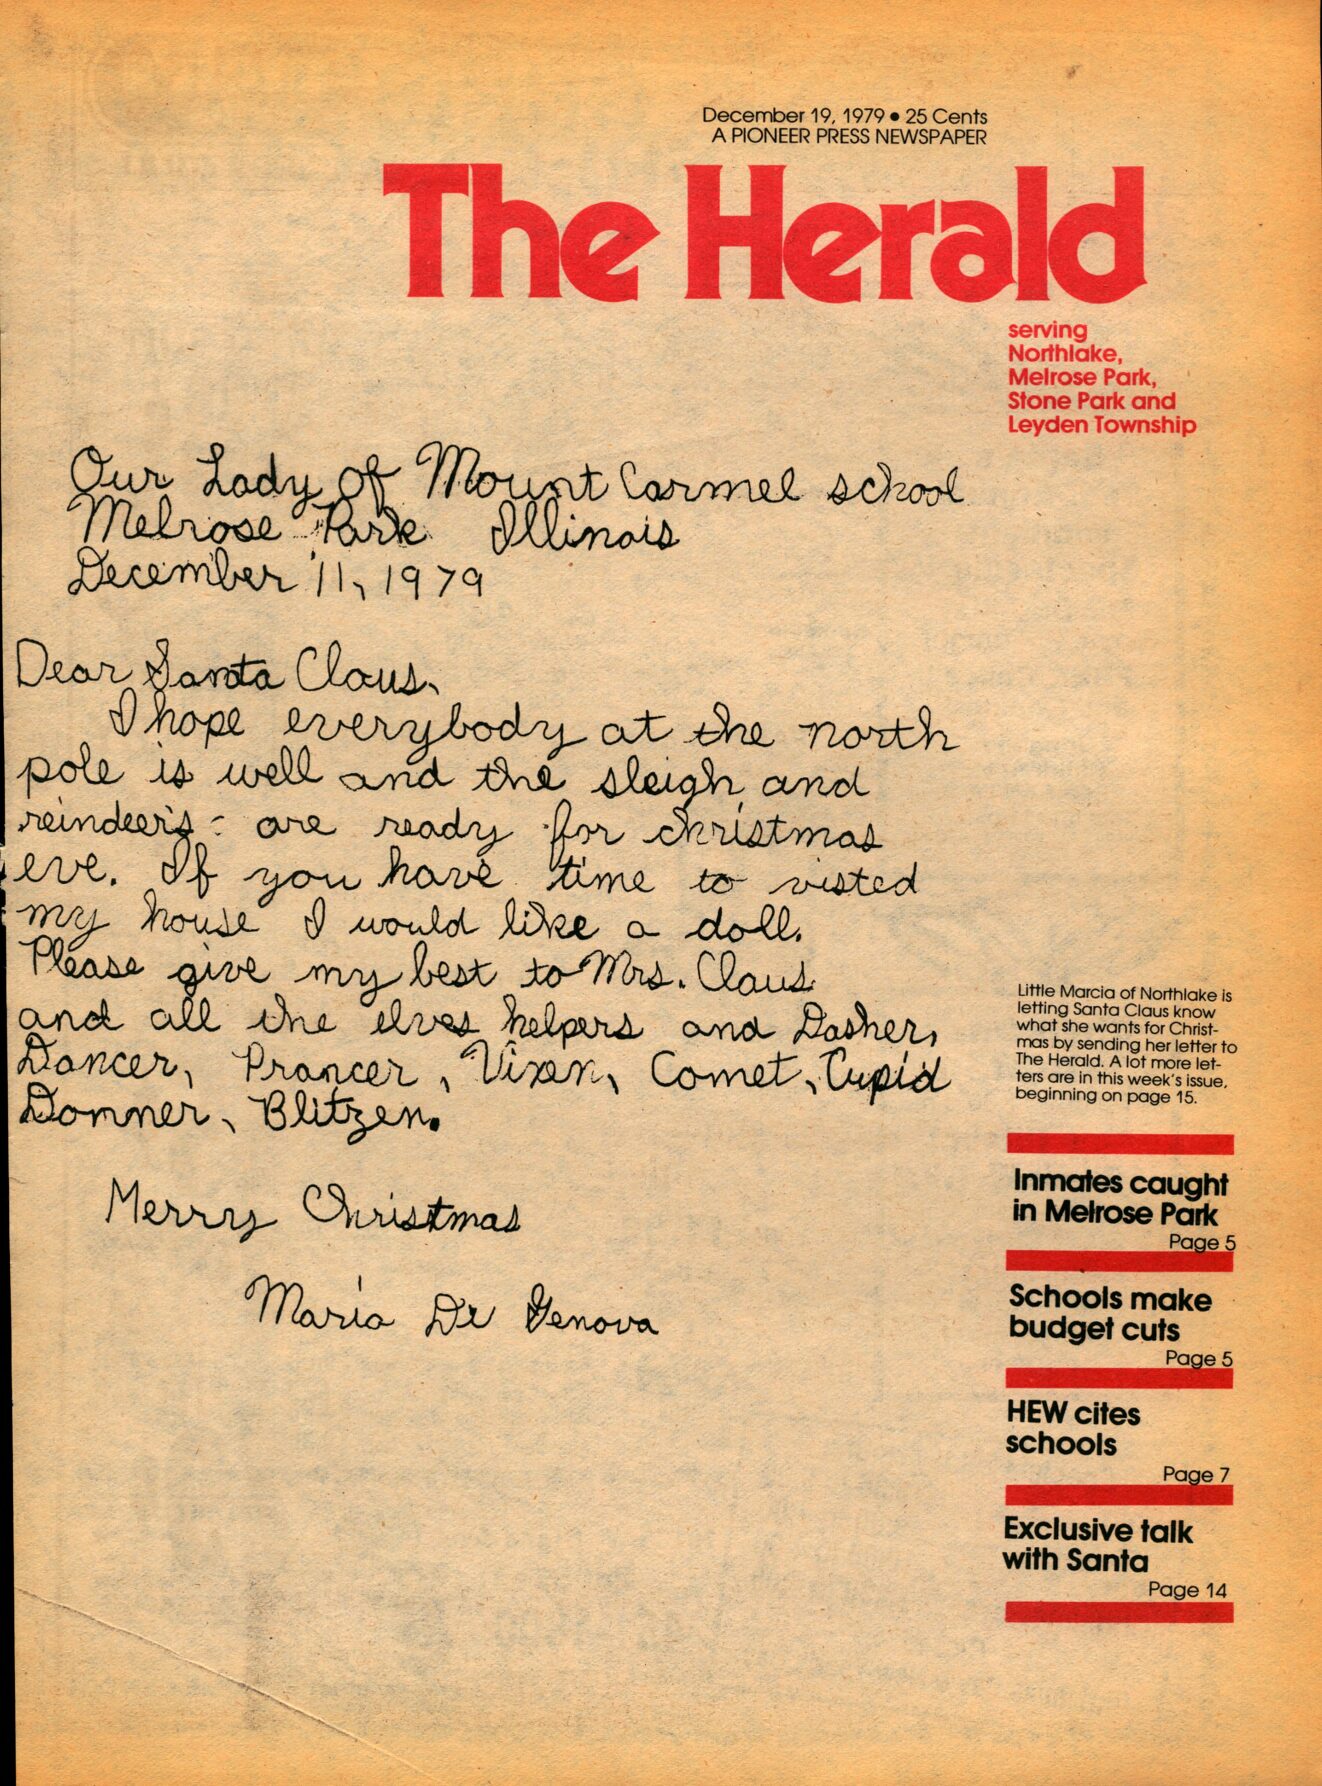 The Herald – 19791219